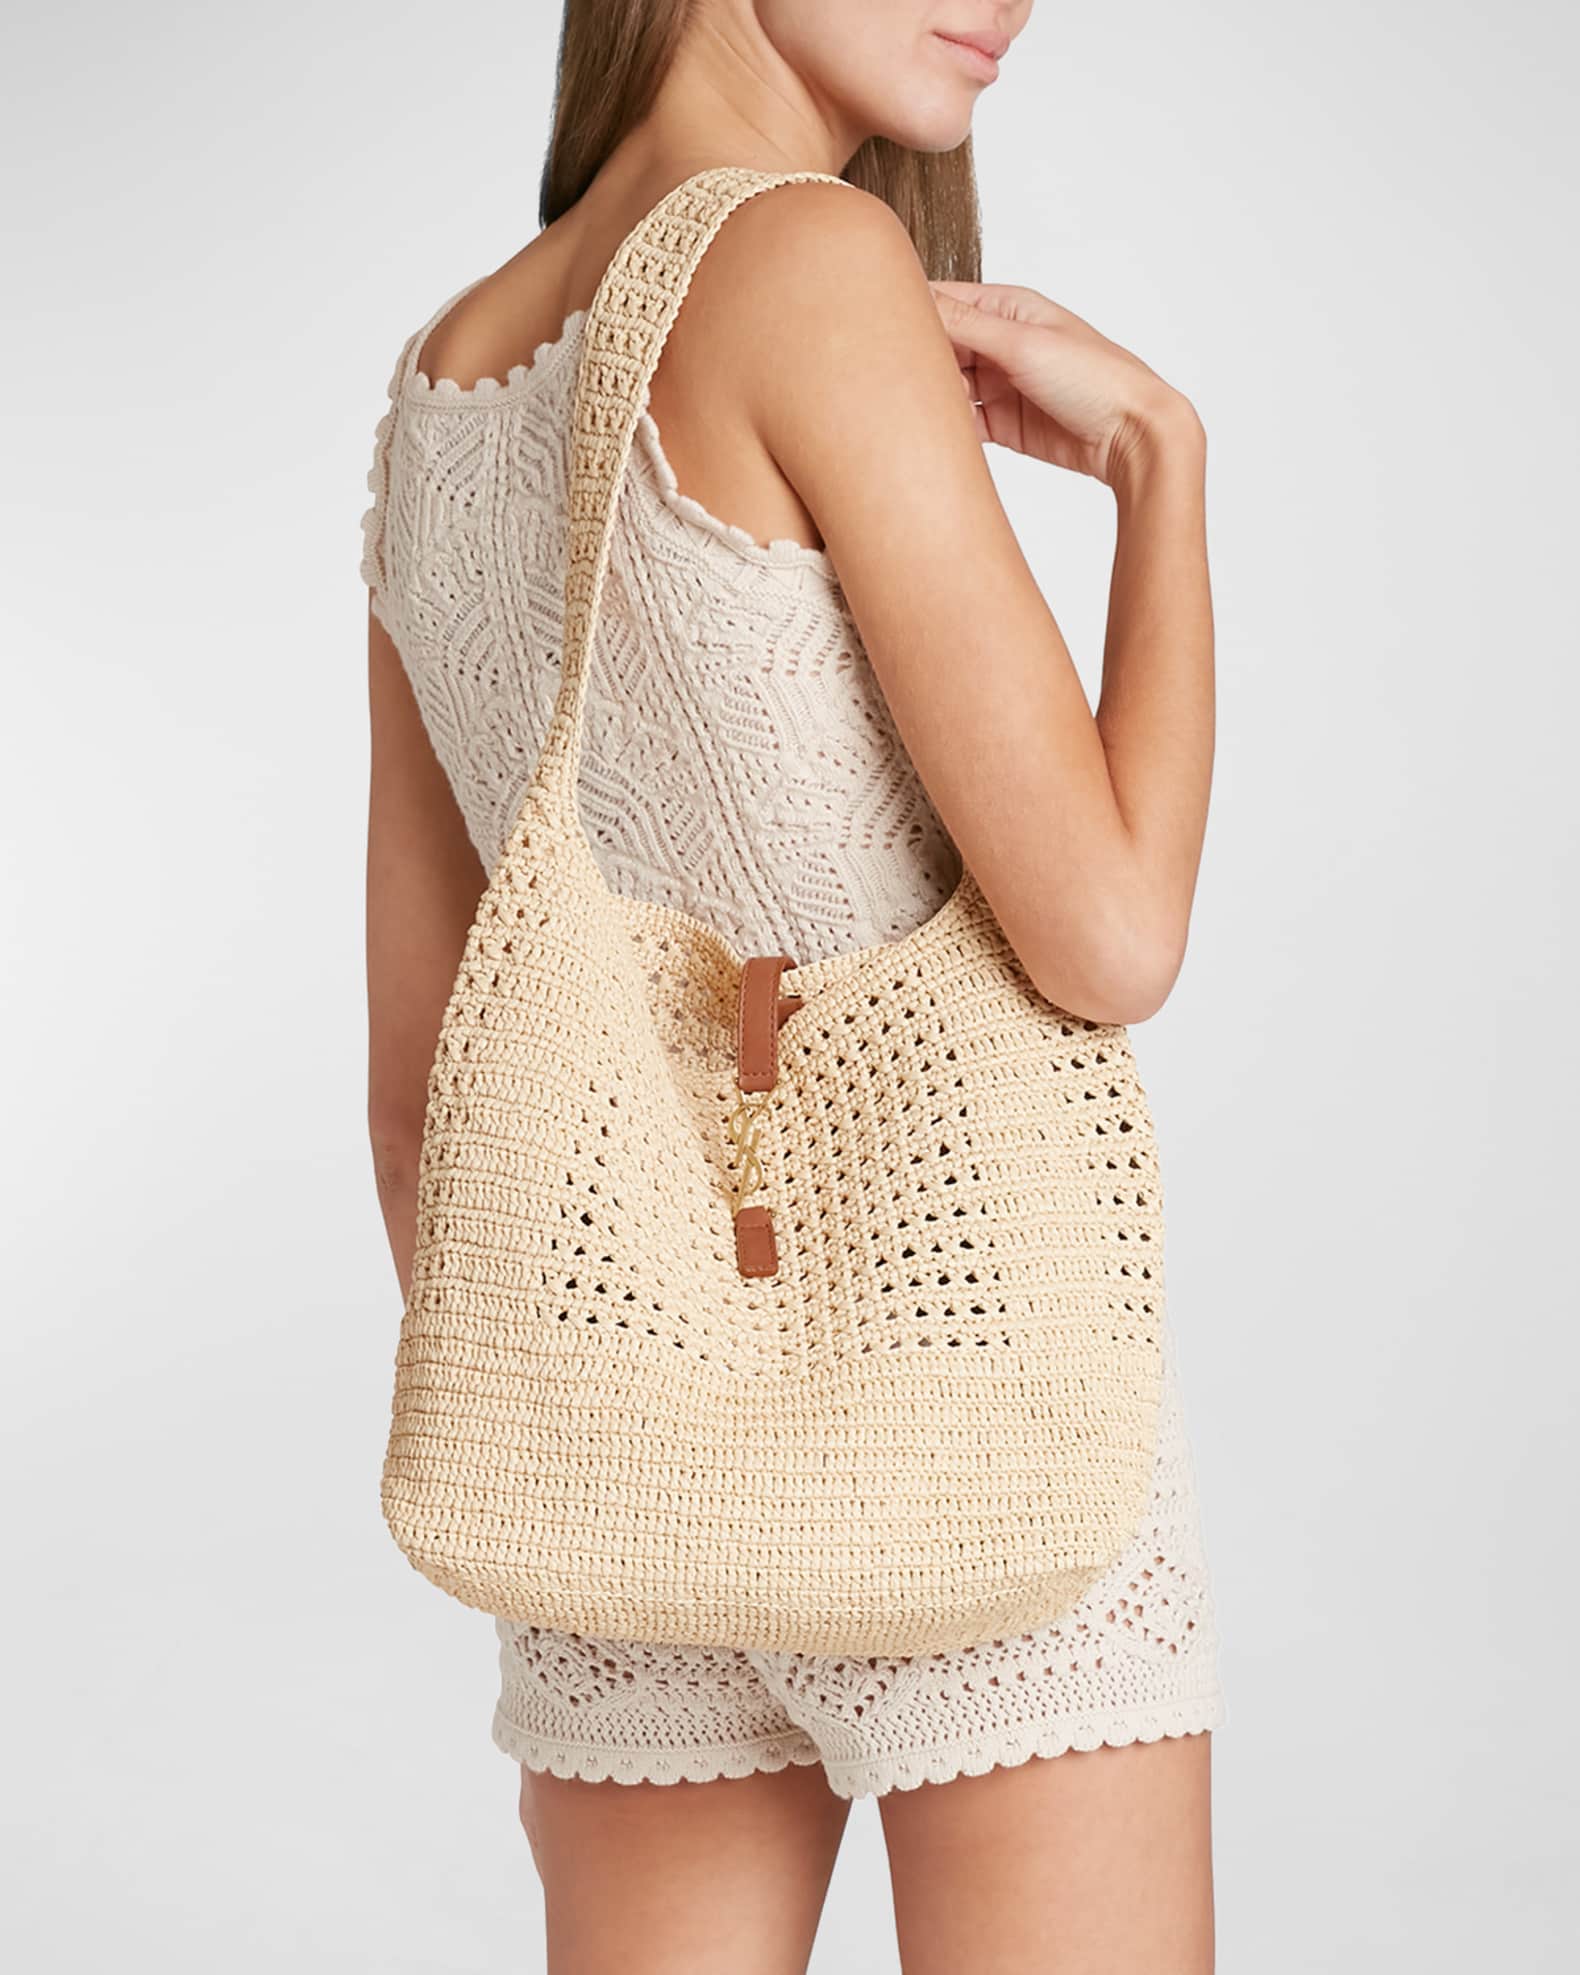 panier medium bag in crochet raffia and smooth leather